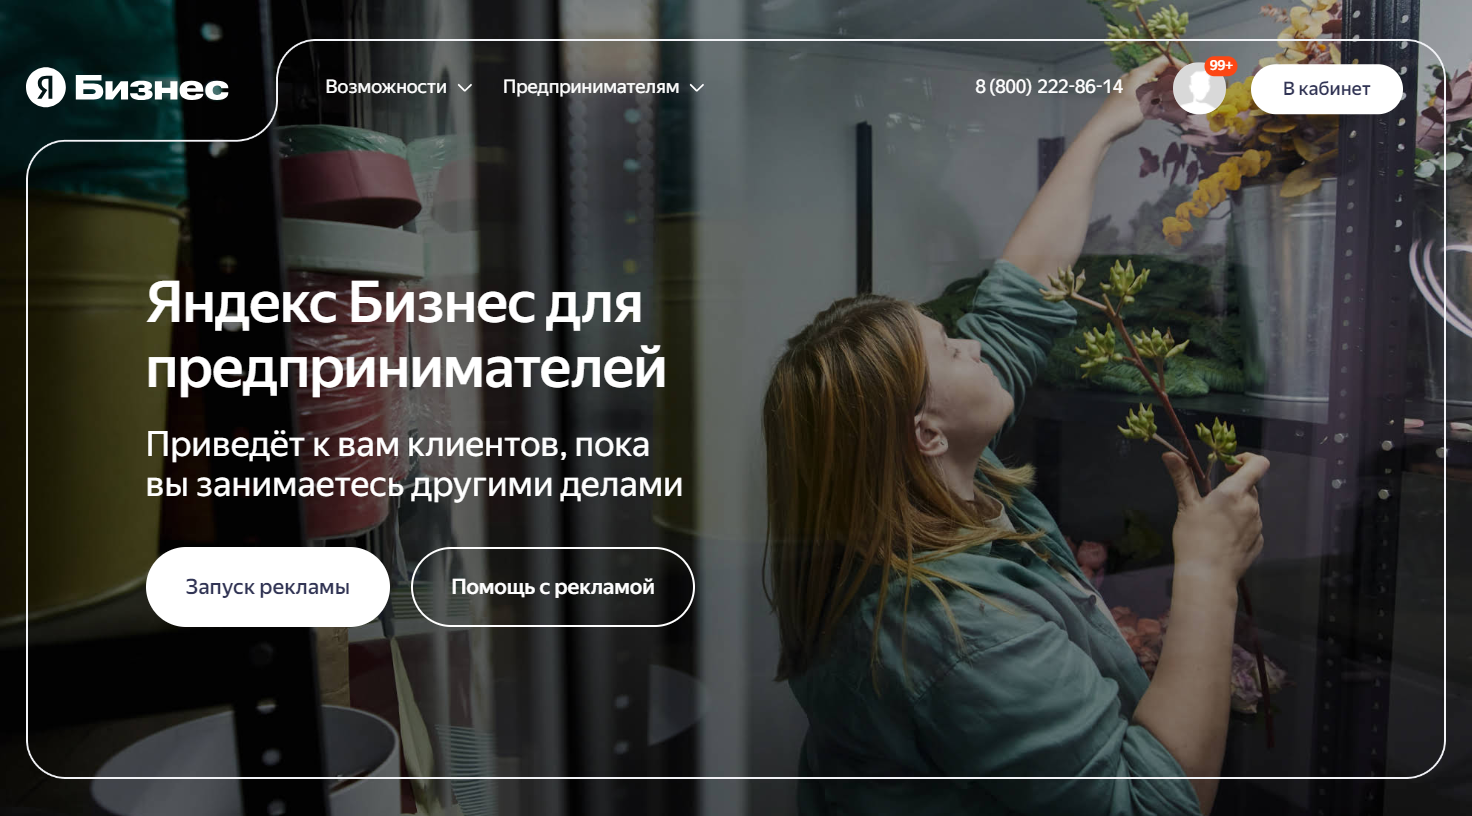 Яндекс.Бизнес: официальный сайт онлайн-сервиса